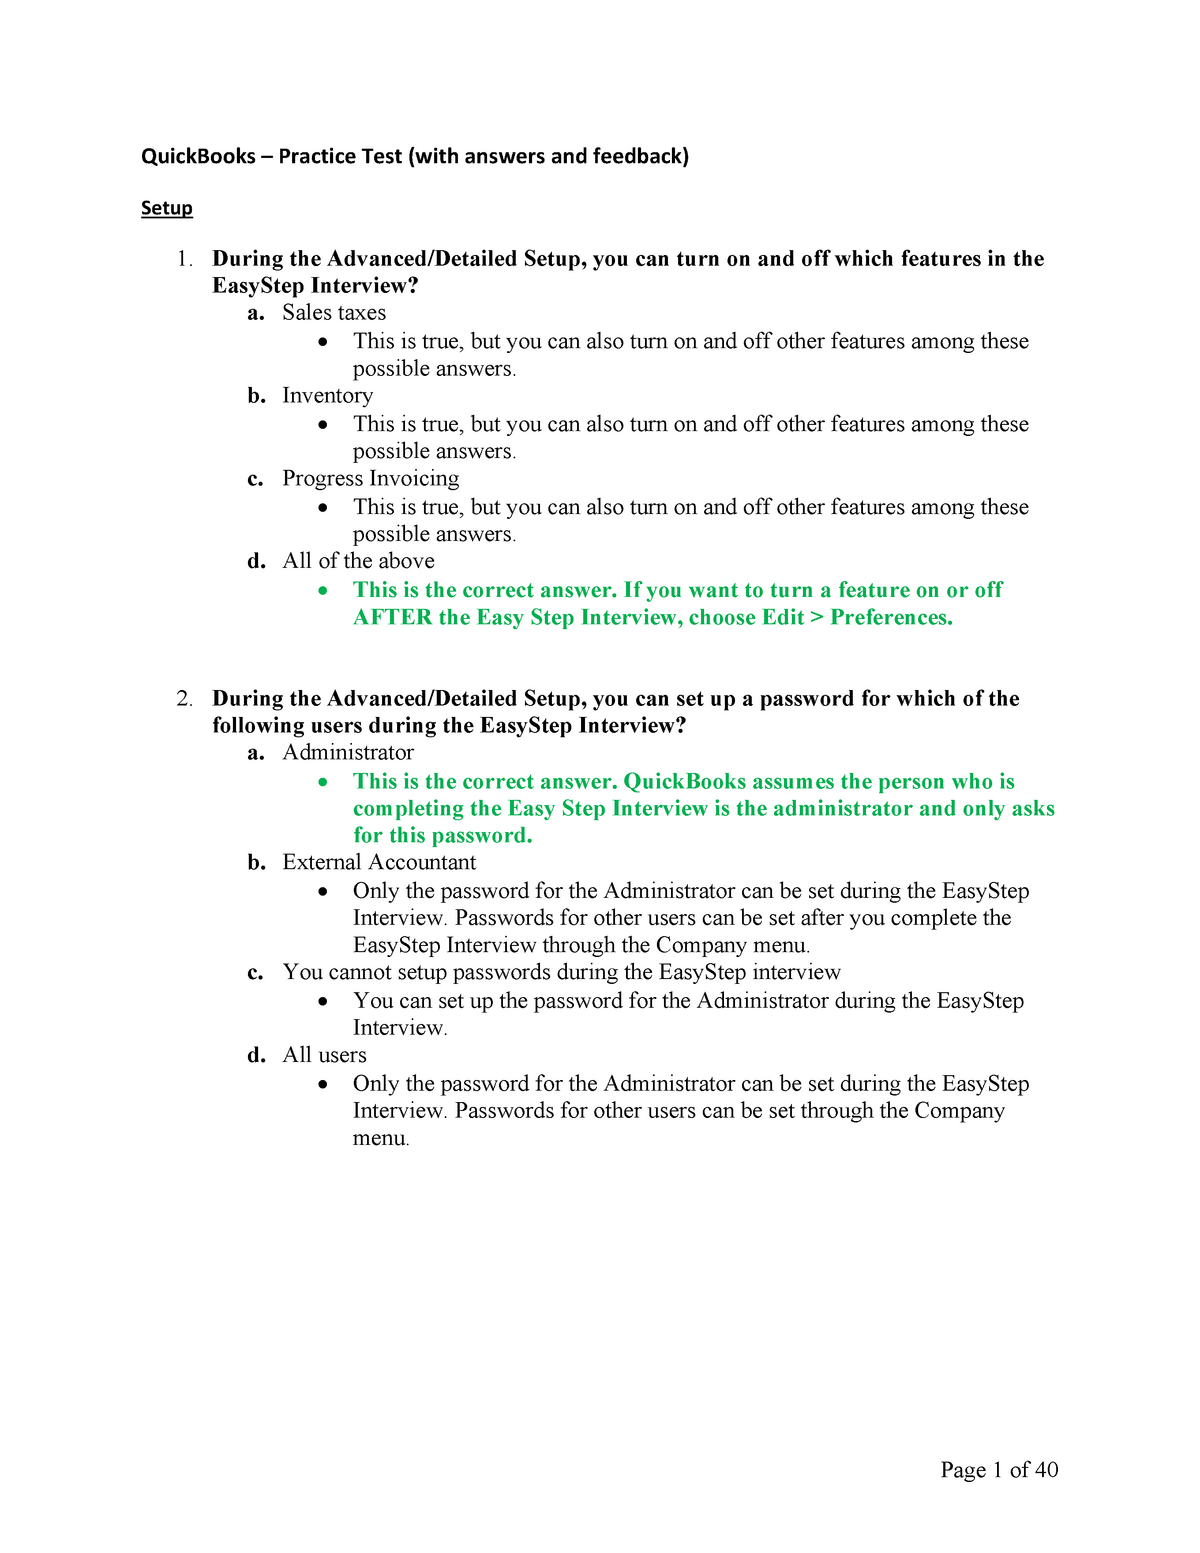 Quickbooks practice with answers feedback QuickBooks Practice Test